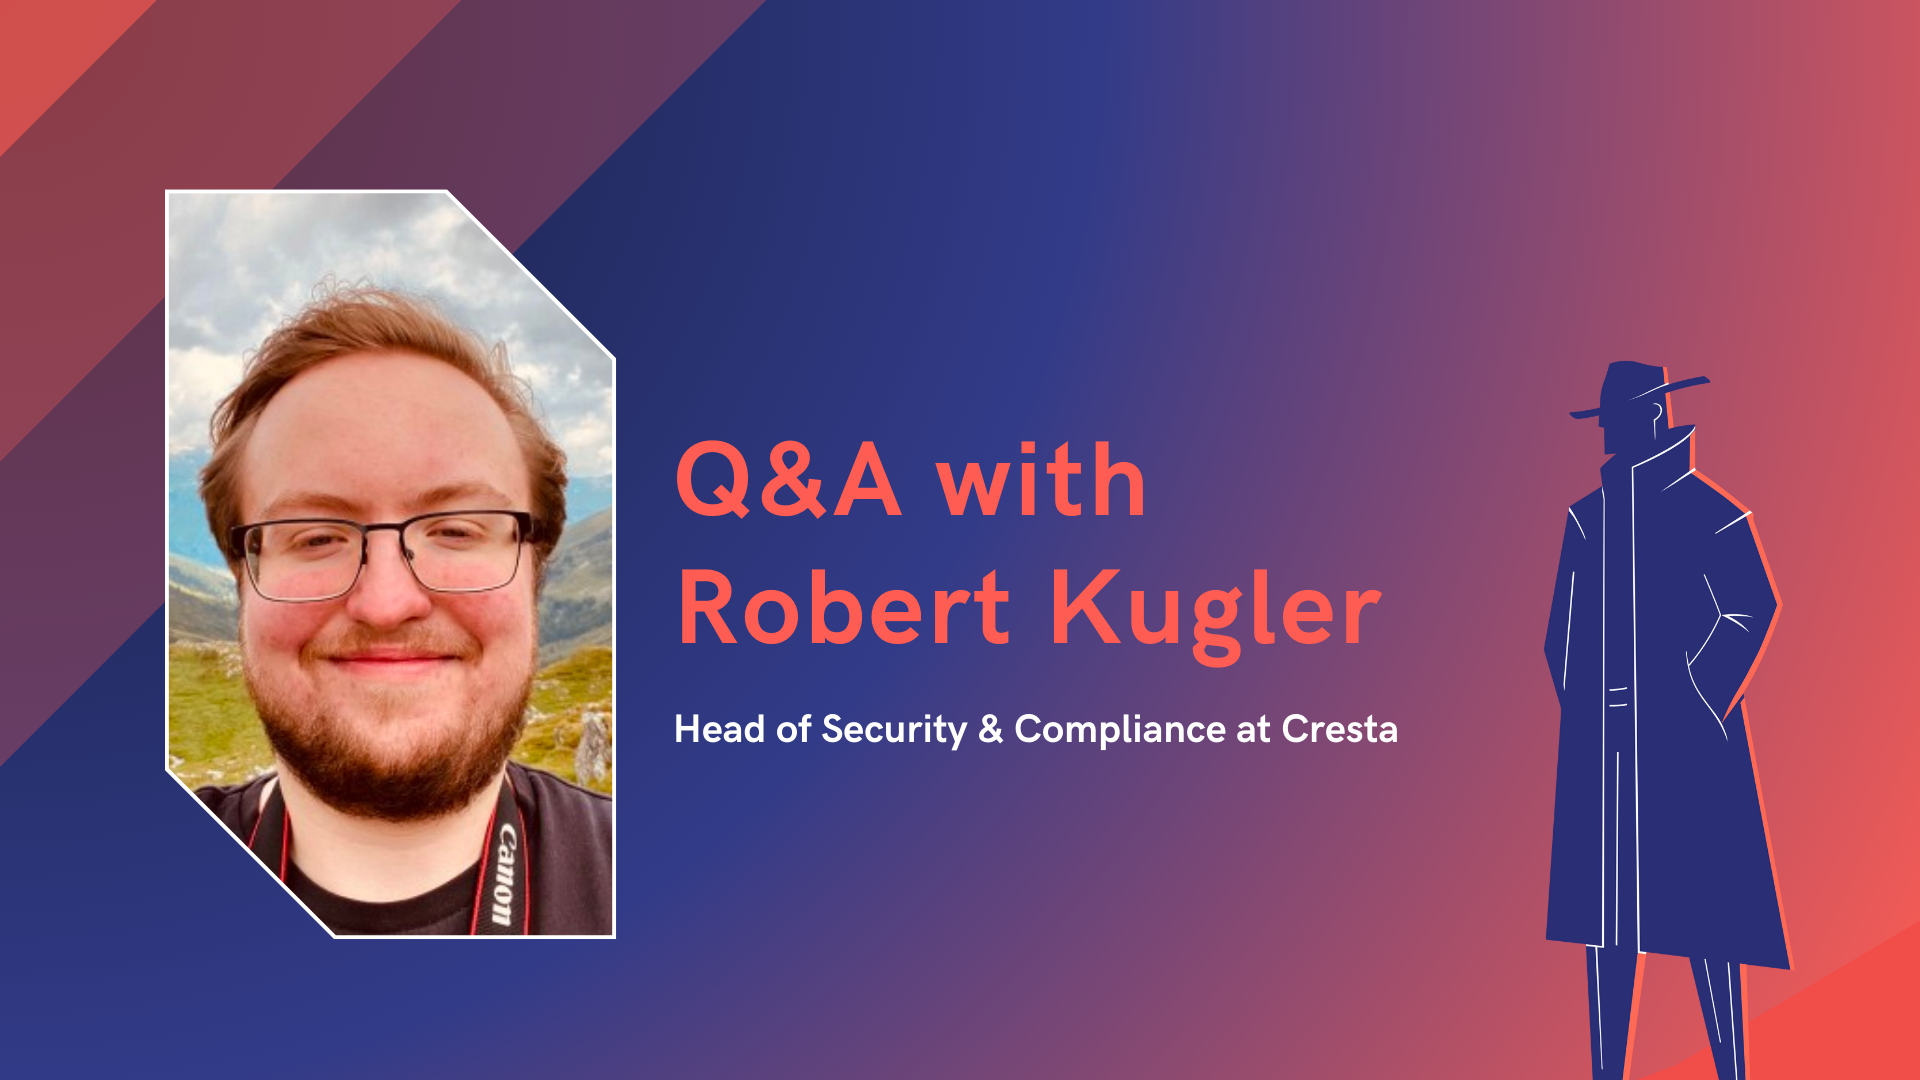 Q&A with Robert Kugler